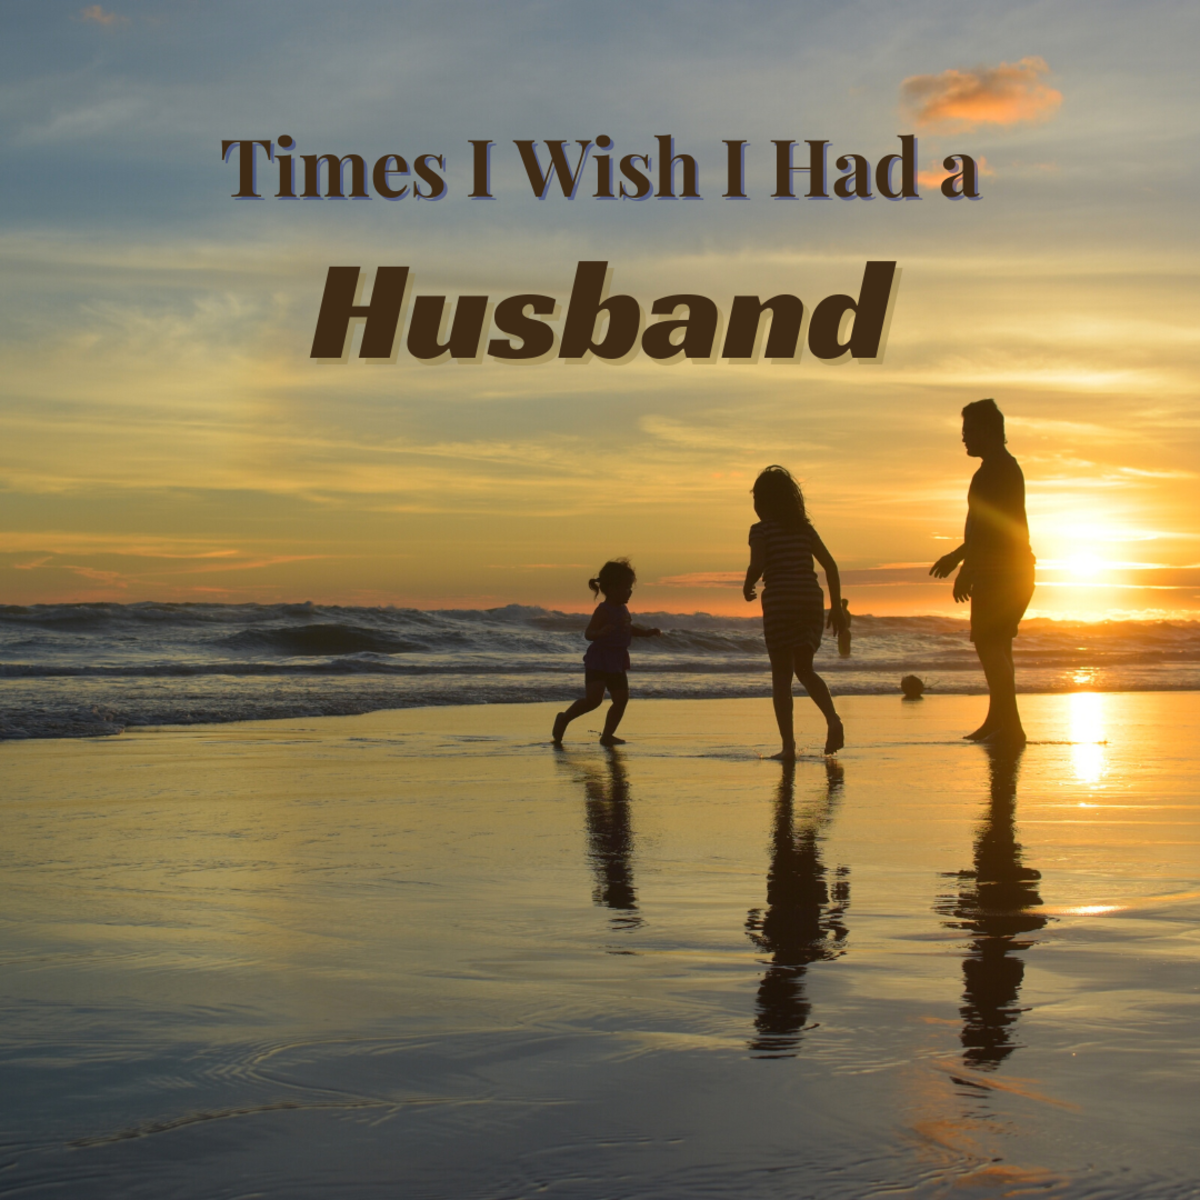 39 Times I Wish I Had a Husband